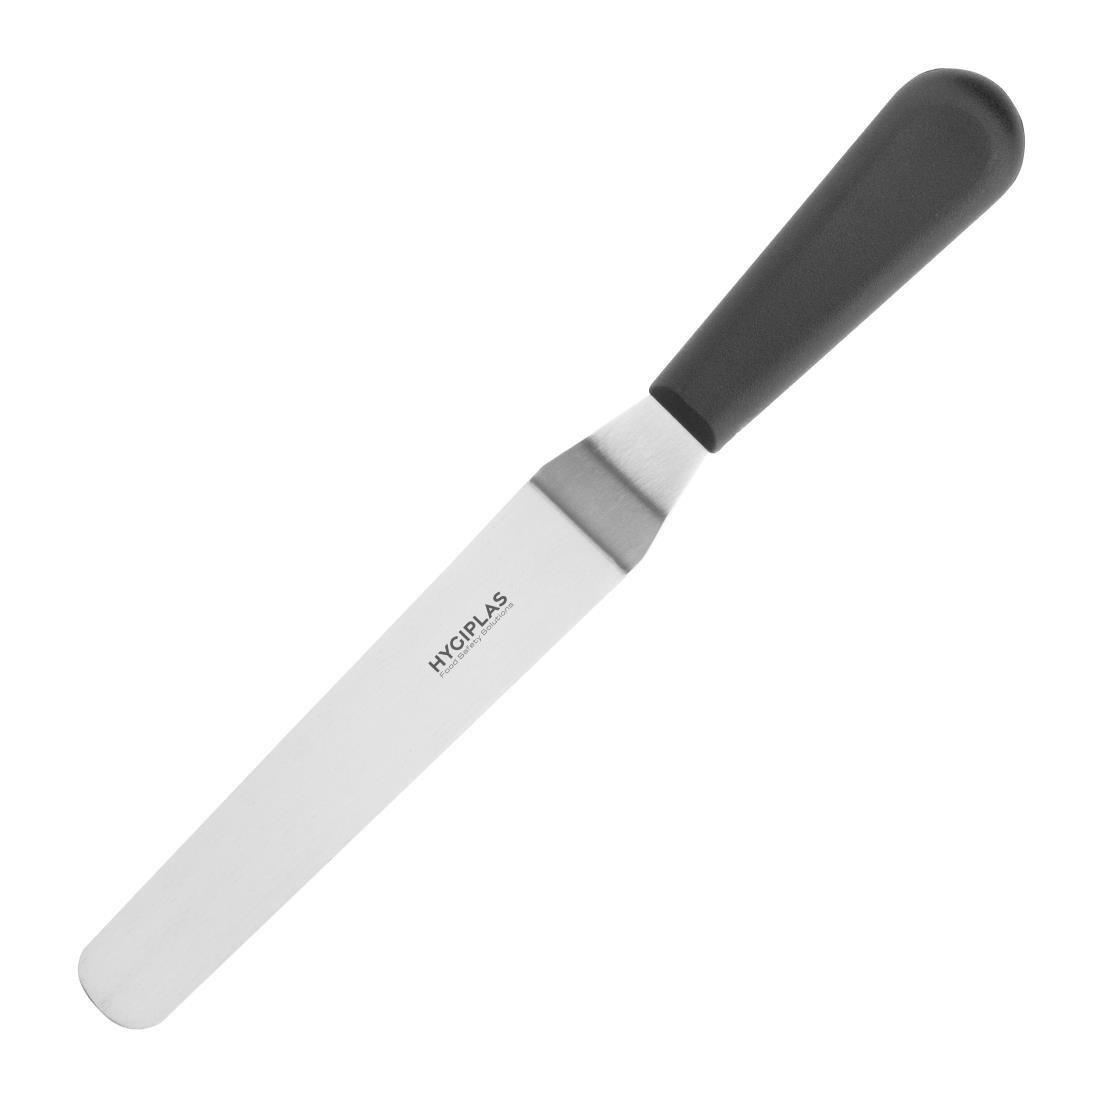 Hygiplas Angled Blade Palette Knife Black 19cm - D410  - 1